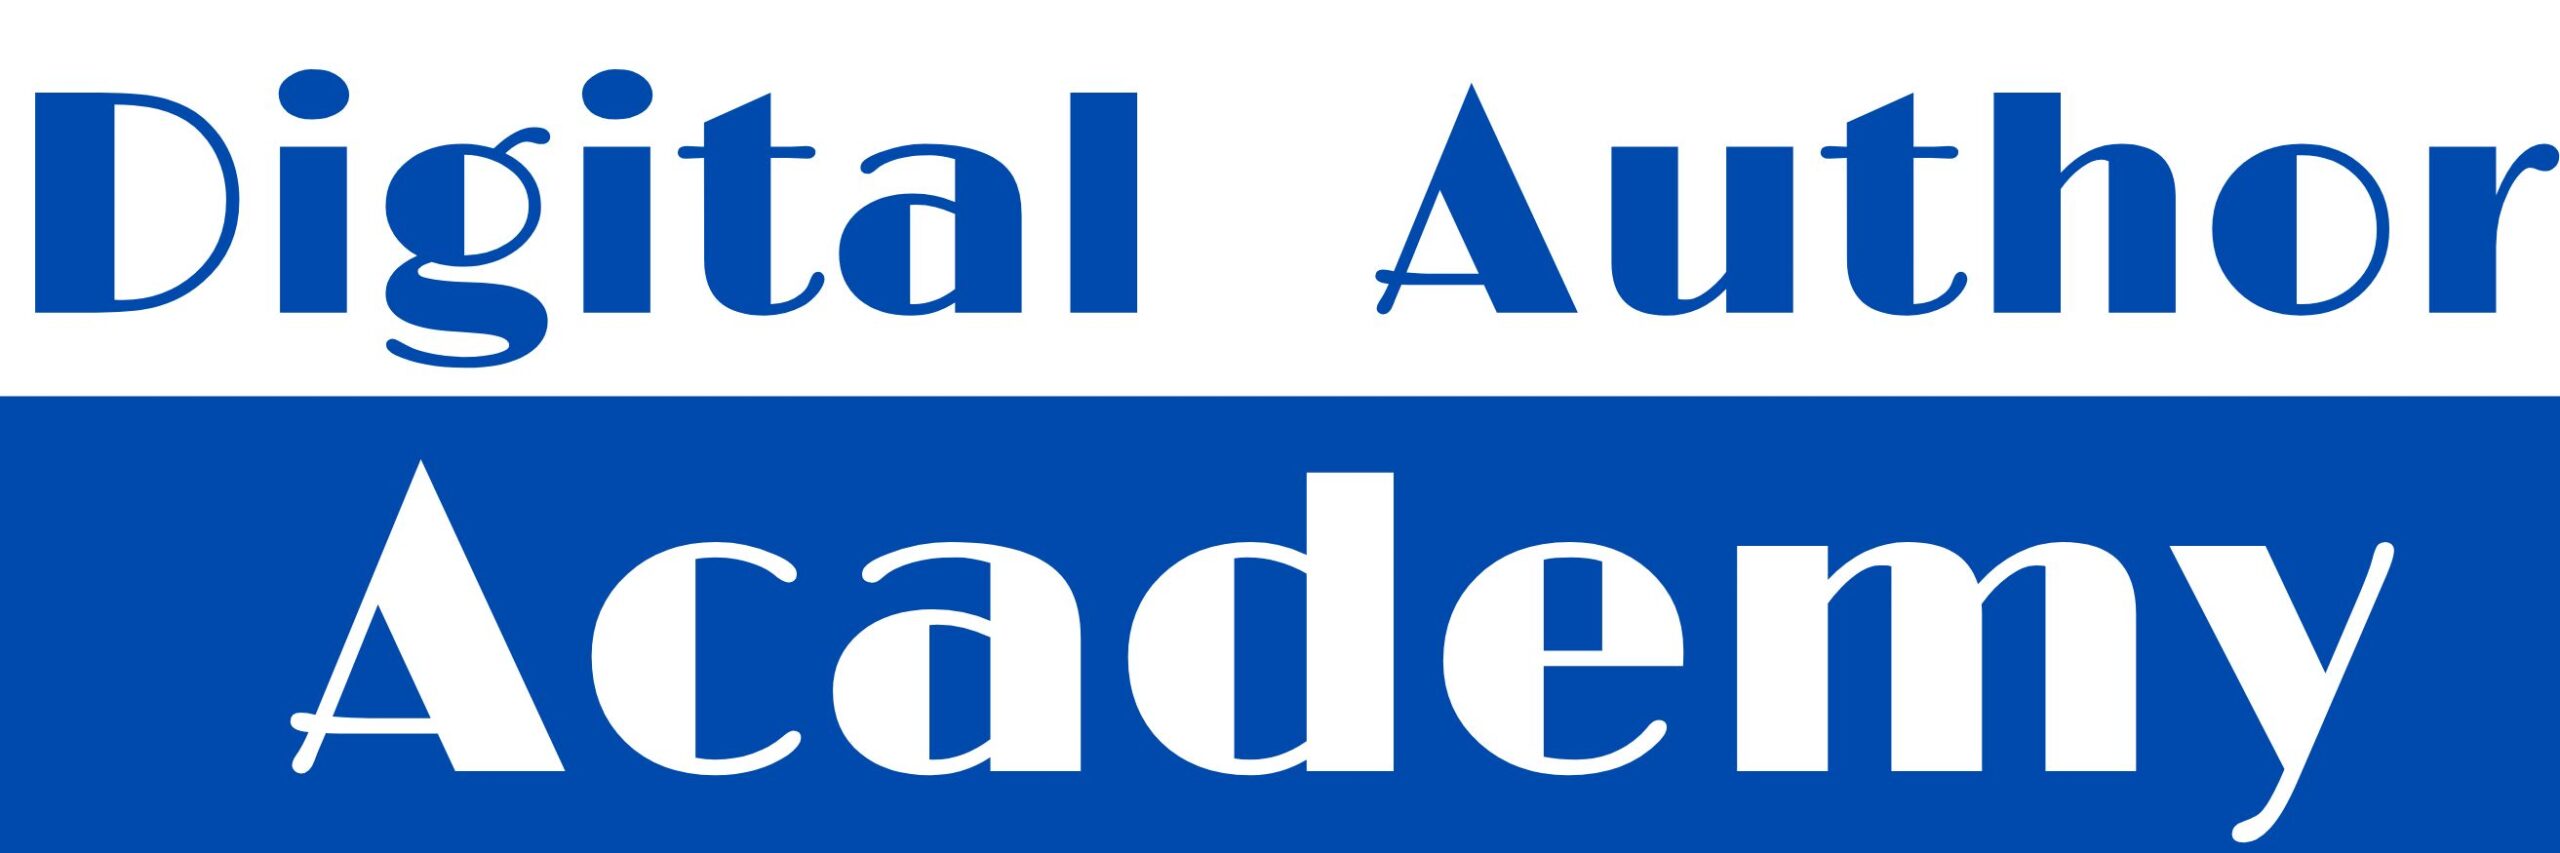 Digital Author Academy logo (1500 x 500 px)